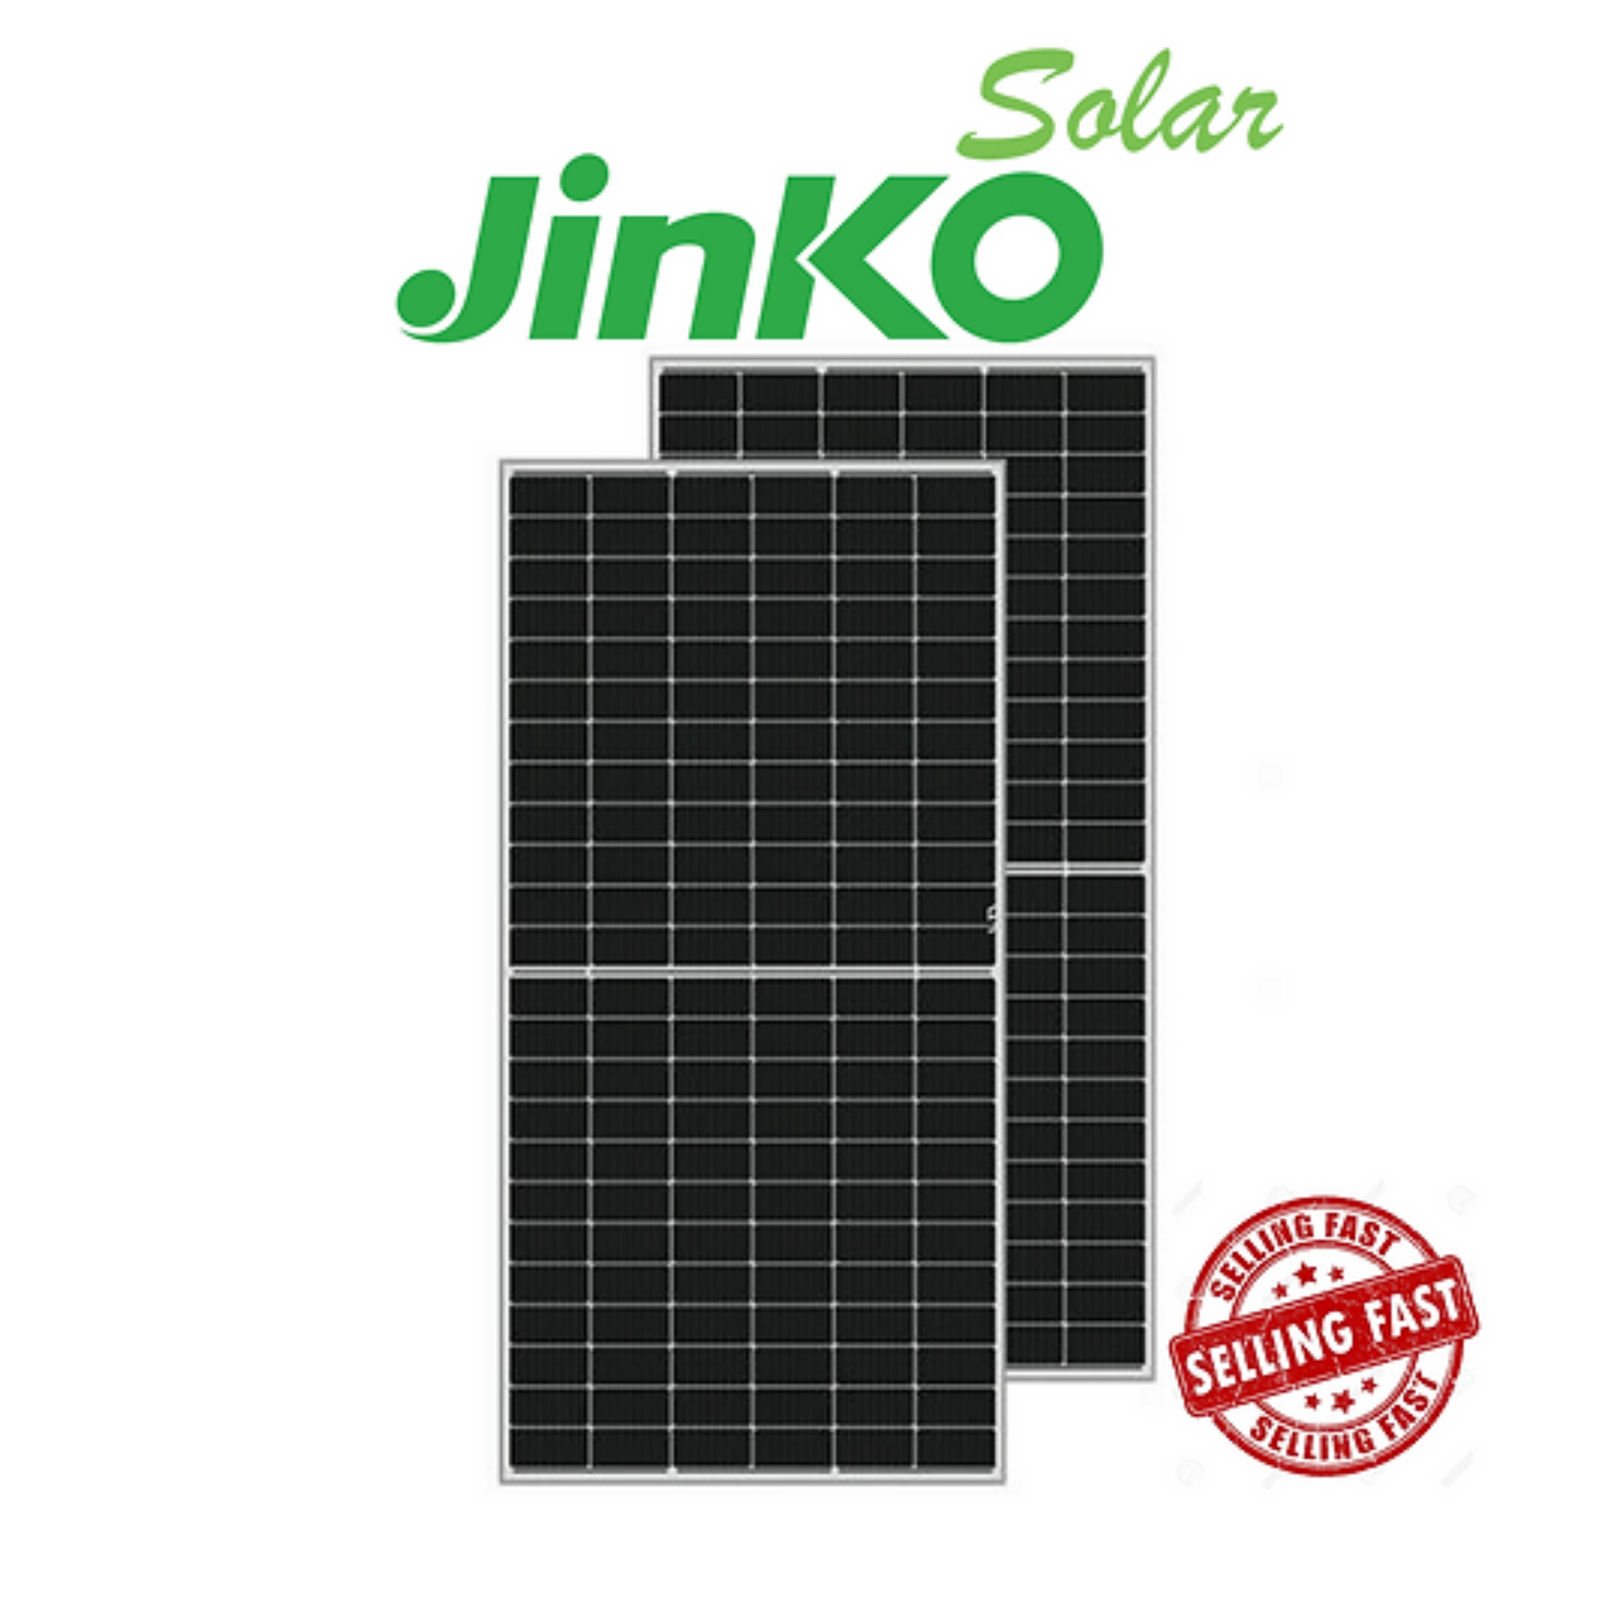 Jinko Solar Panels